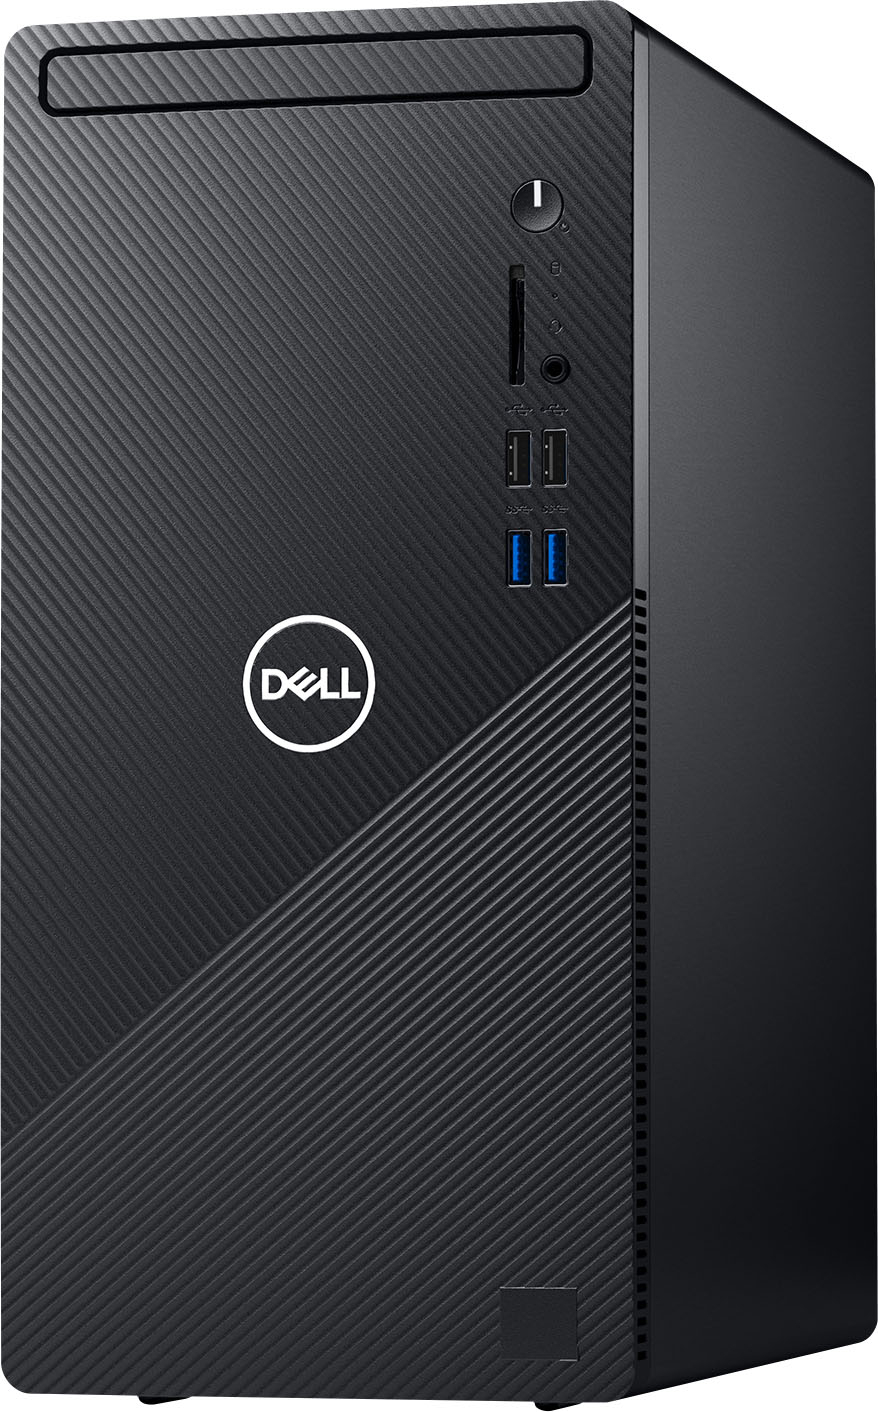 Dell Inspiron 3880 Desktop Intel Core i5 12GB Memory 256B SSD Black  i3880-5910BLK-PUS - Best Buy